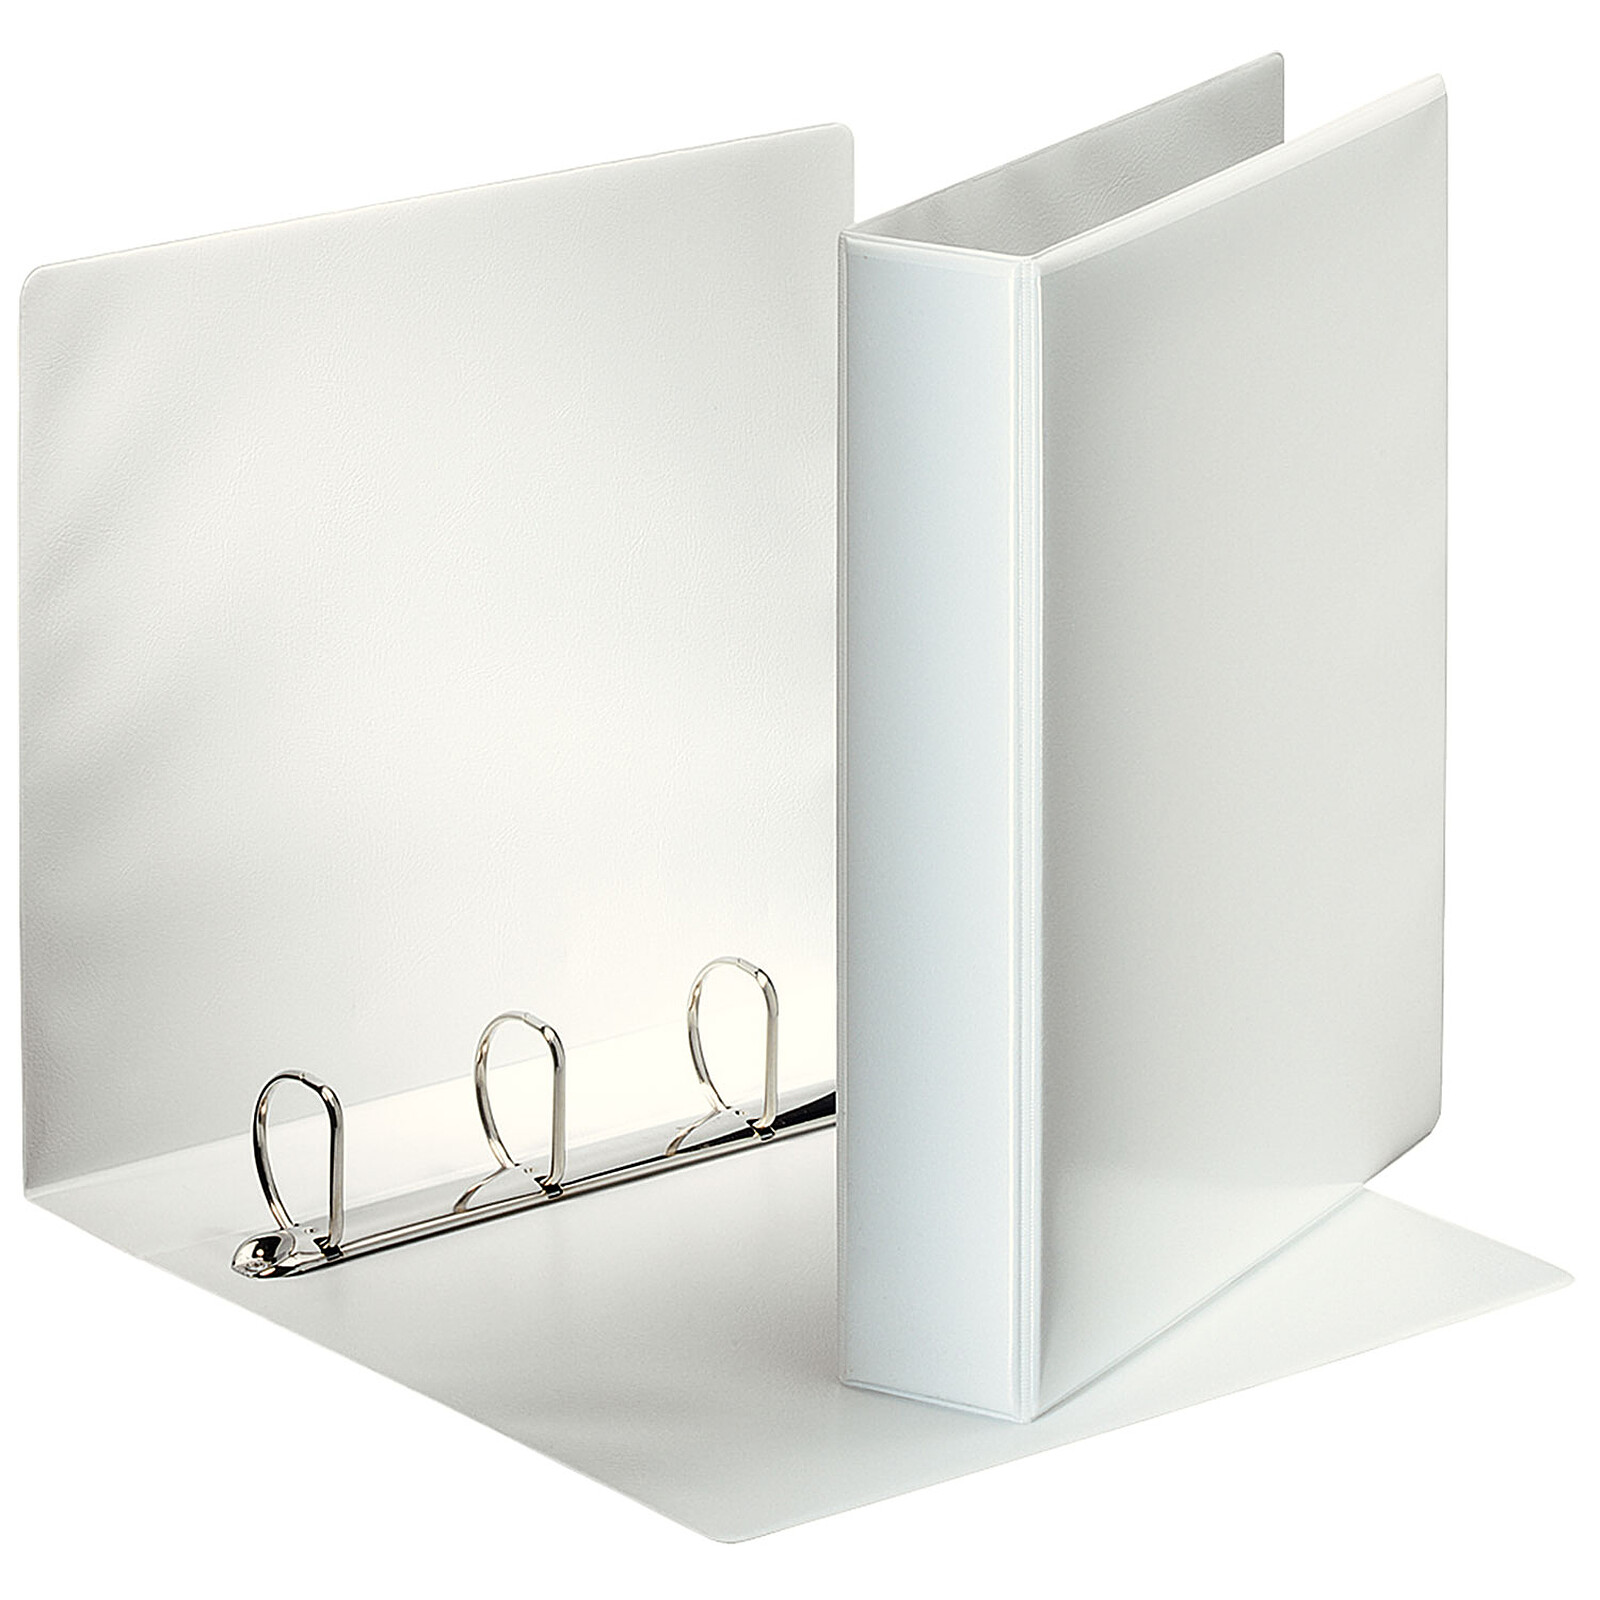 Pack of 10 White Esselte 33.8 x 52.5 x 30.6 cm Standard Binder Storage and Transportation Box 